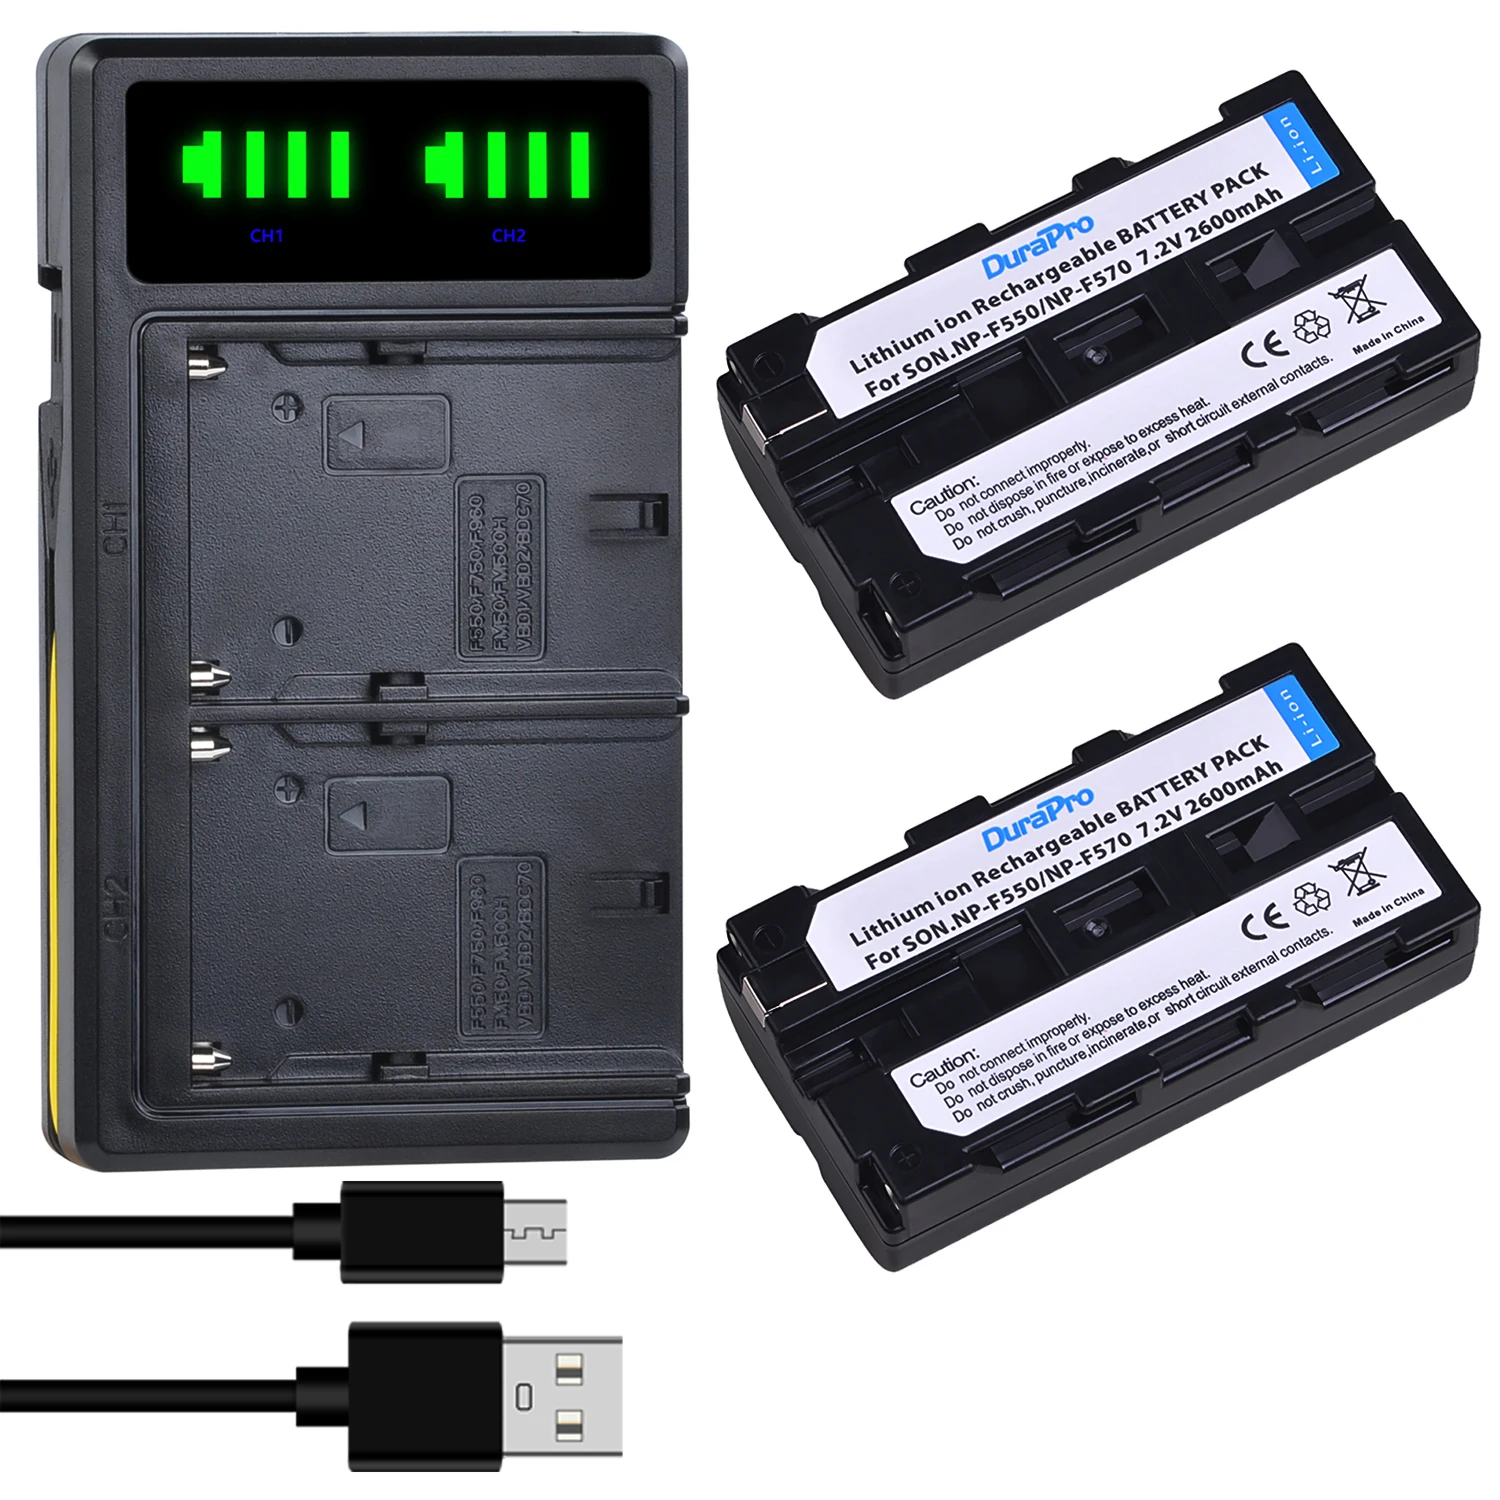 

2PC 2600mAH NP-F550 NP-F570 NP F550 Camera Battery + LCD USB Charger for Sony NP-F330 NP-F530 NP-F570 NP-F730 NP-F750 CCD-RV100